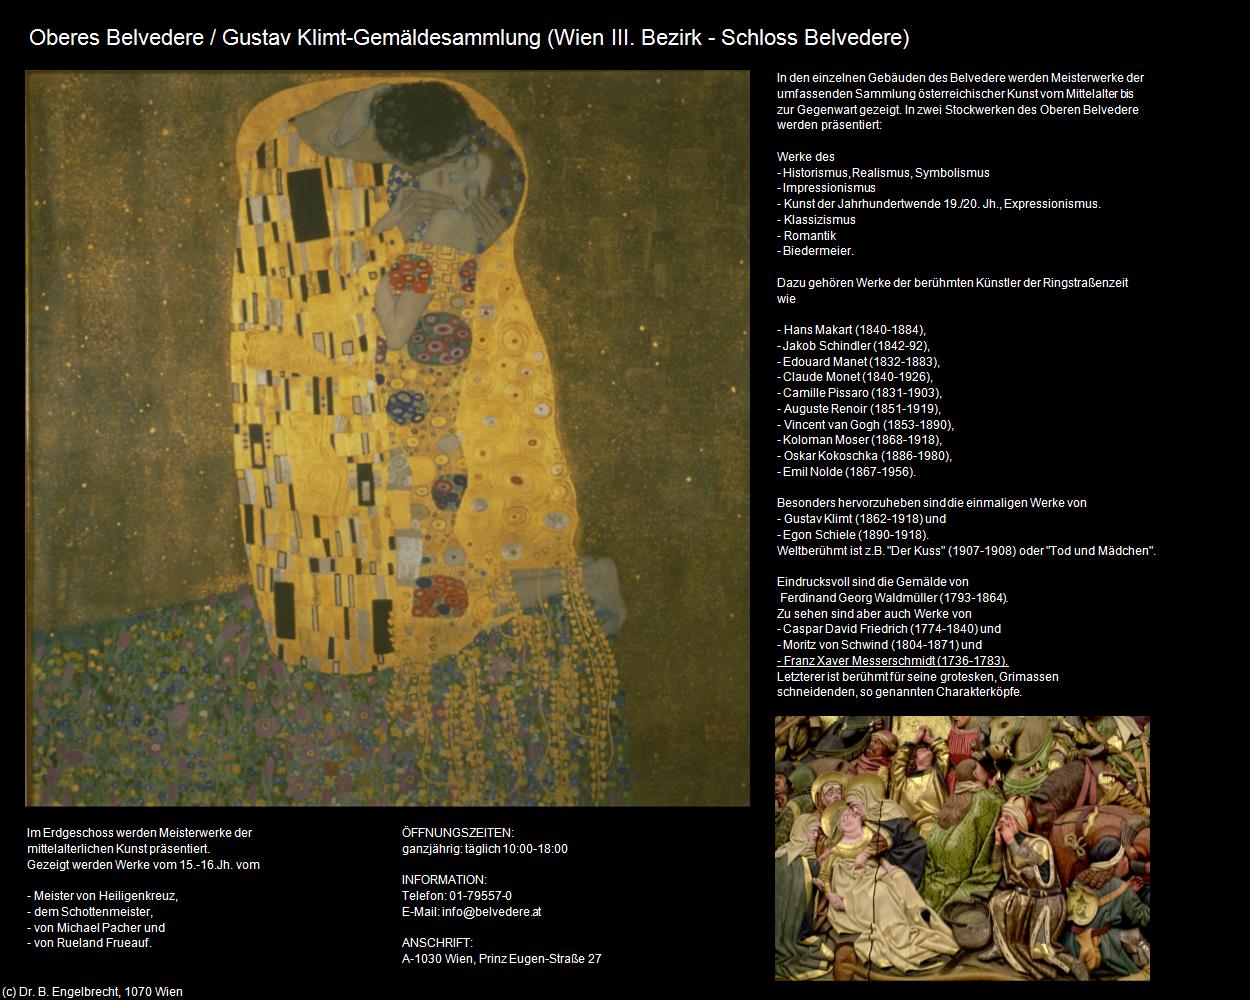 Oberes Belvedere/Gustav Klimt-Gemäldesammlung (Belvedere) in Kulturatlas-WIEN(c)B.Engelbrecht